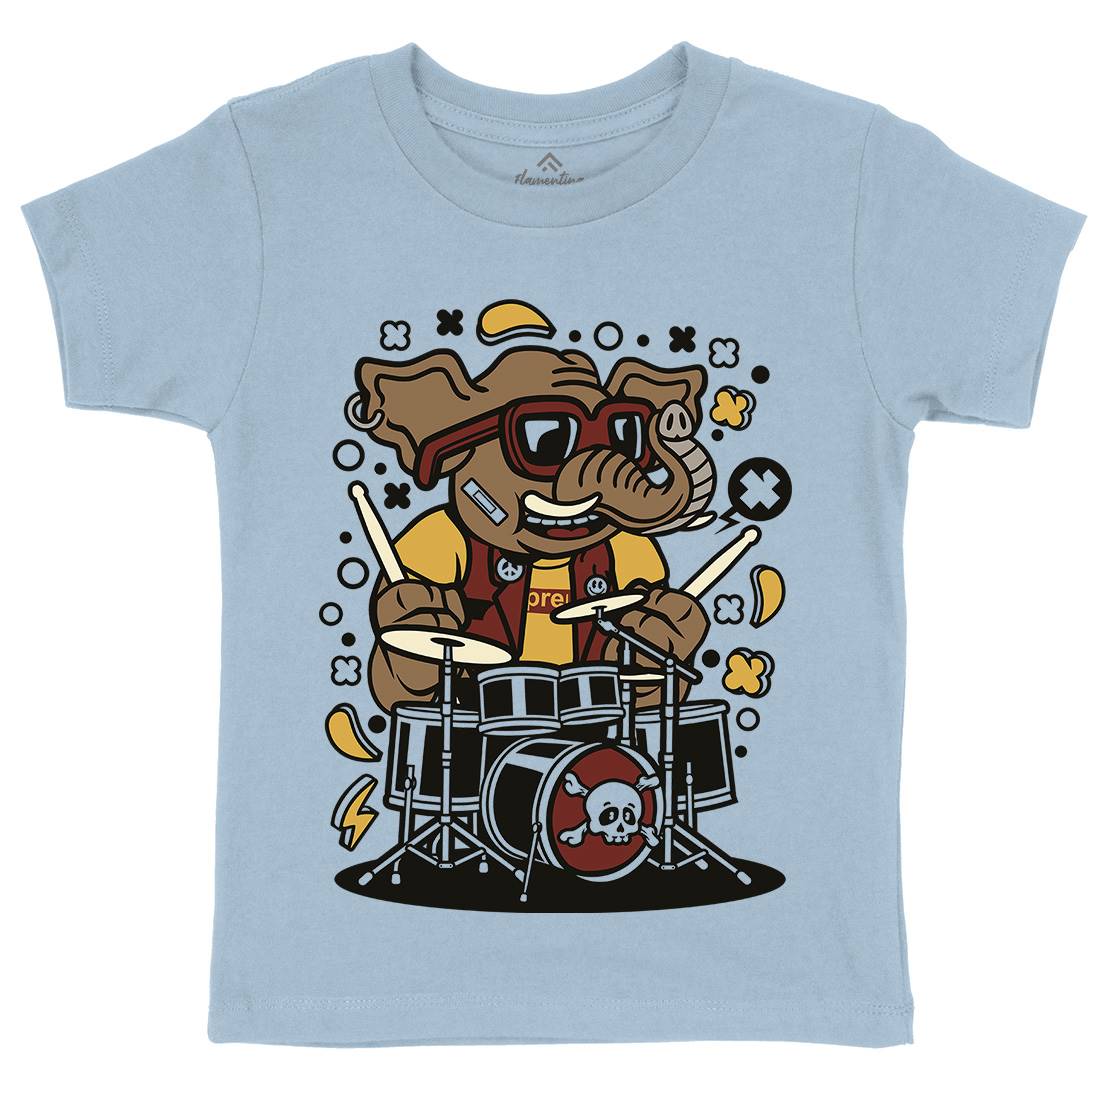 Elephant Drummer Kids Crew Neck T-Shirt Music C543